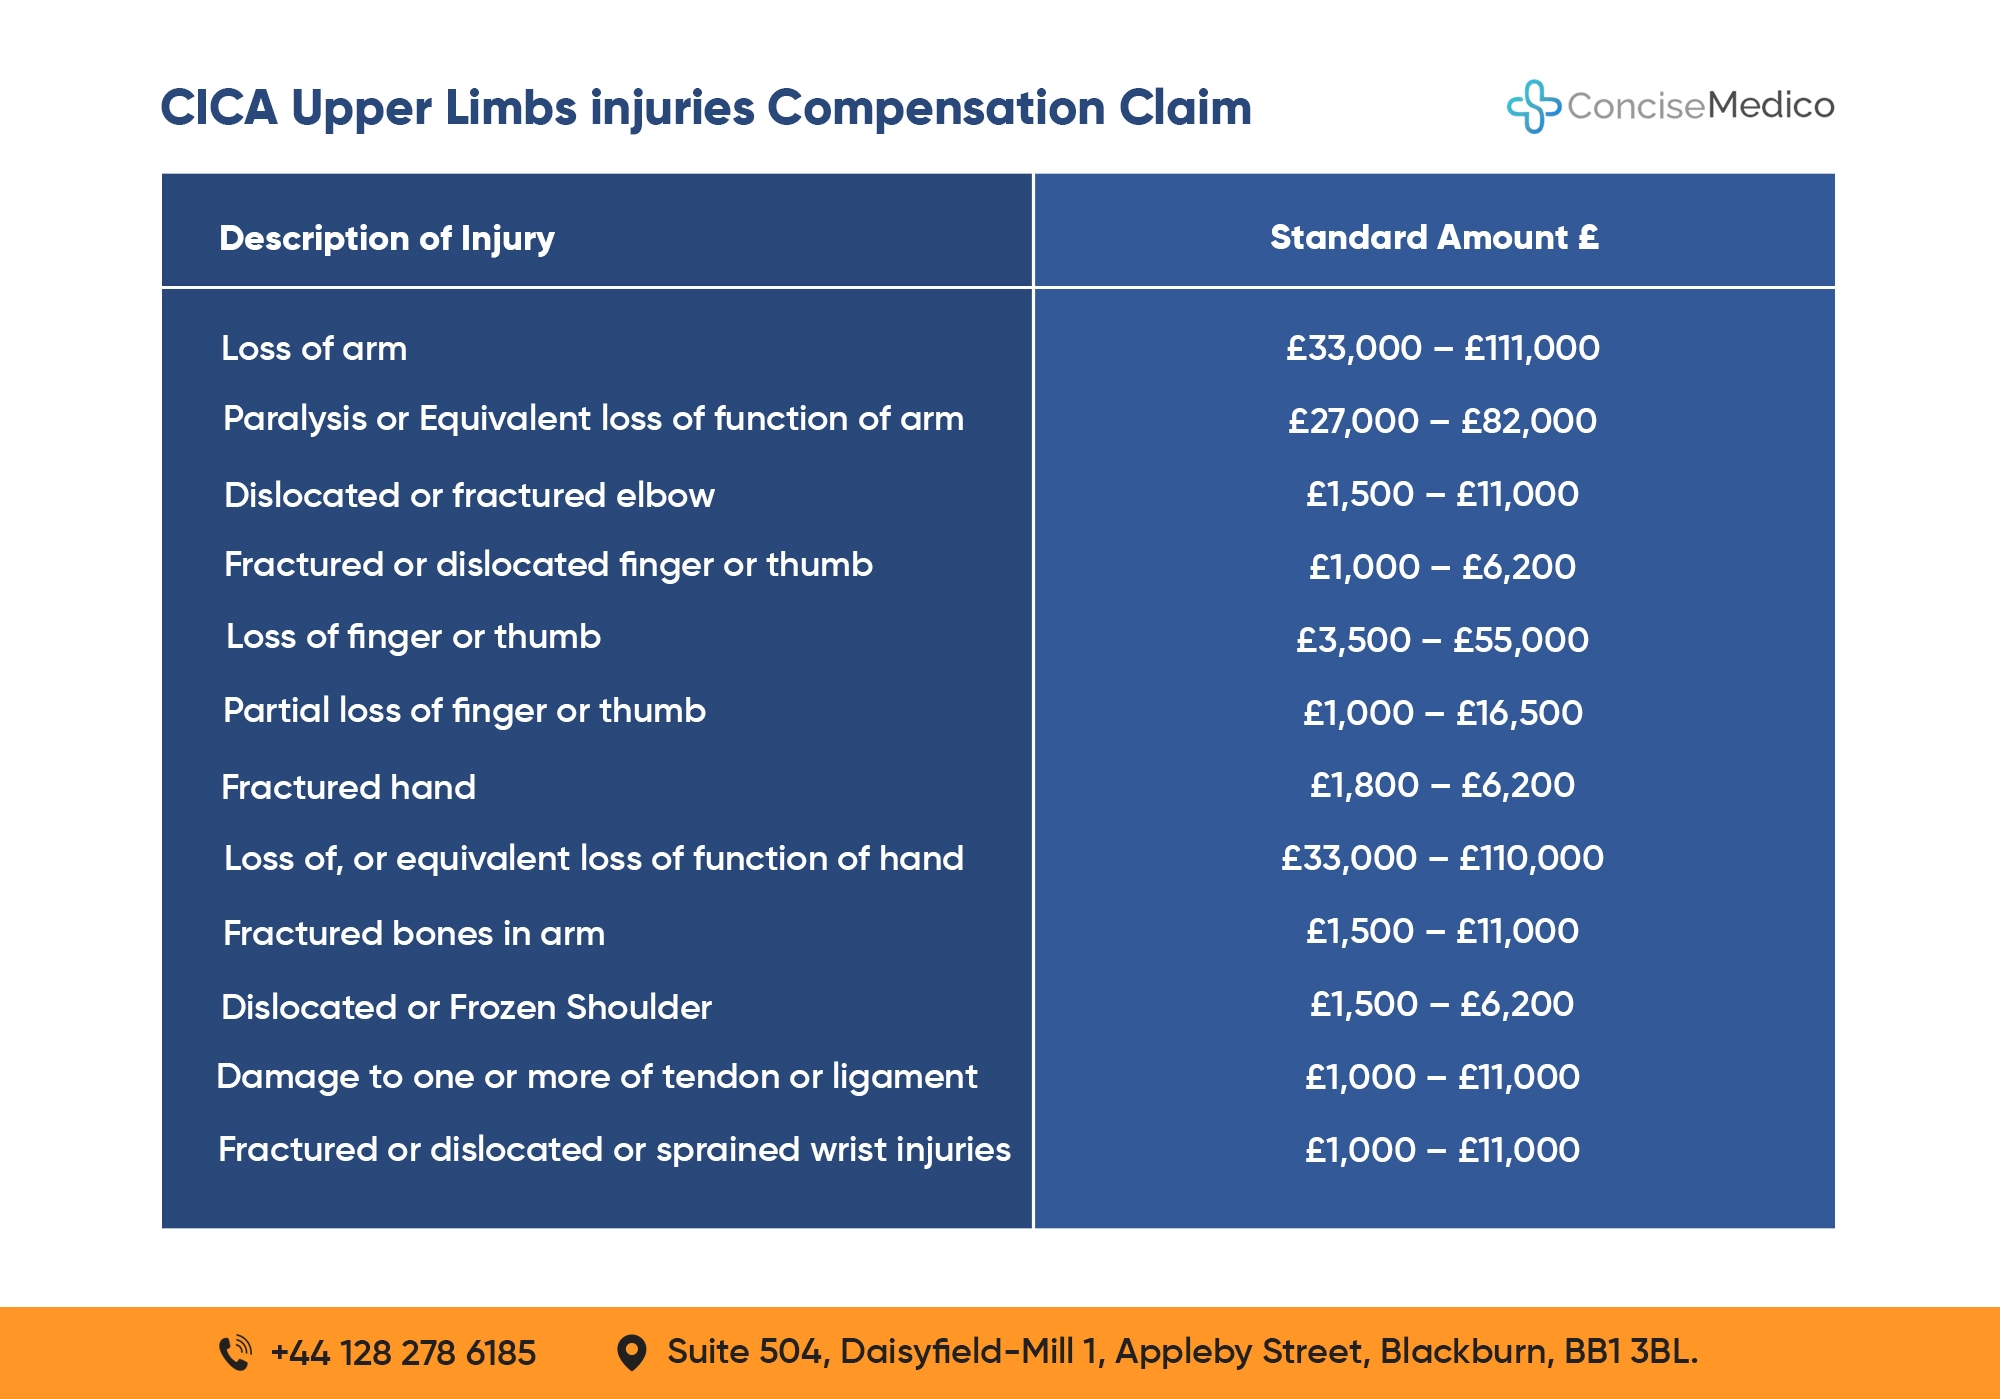 CICA Upper Limbs Injuries Compensation Amount